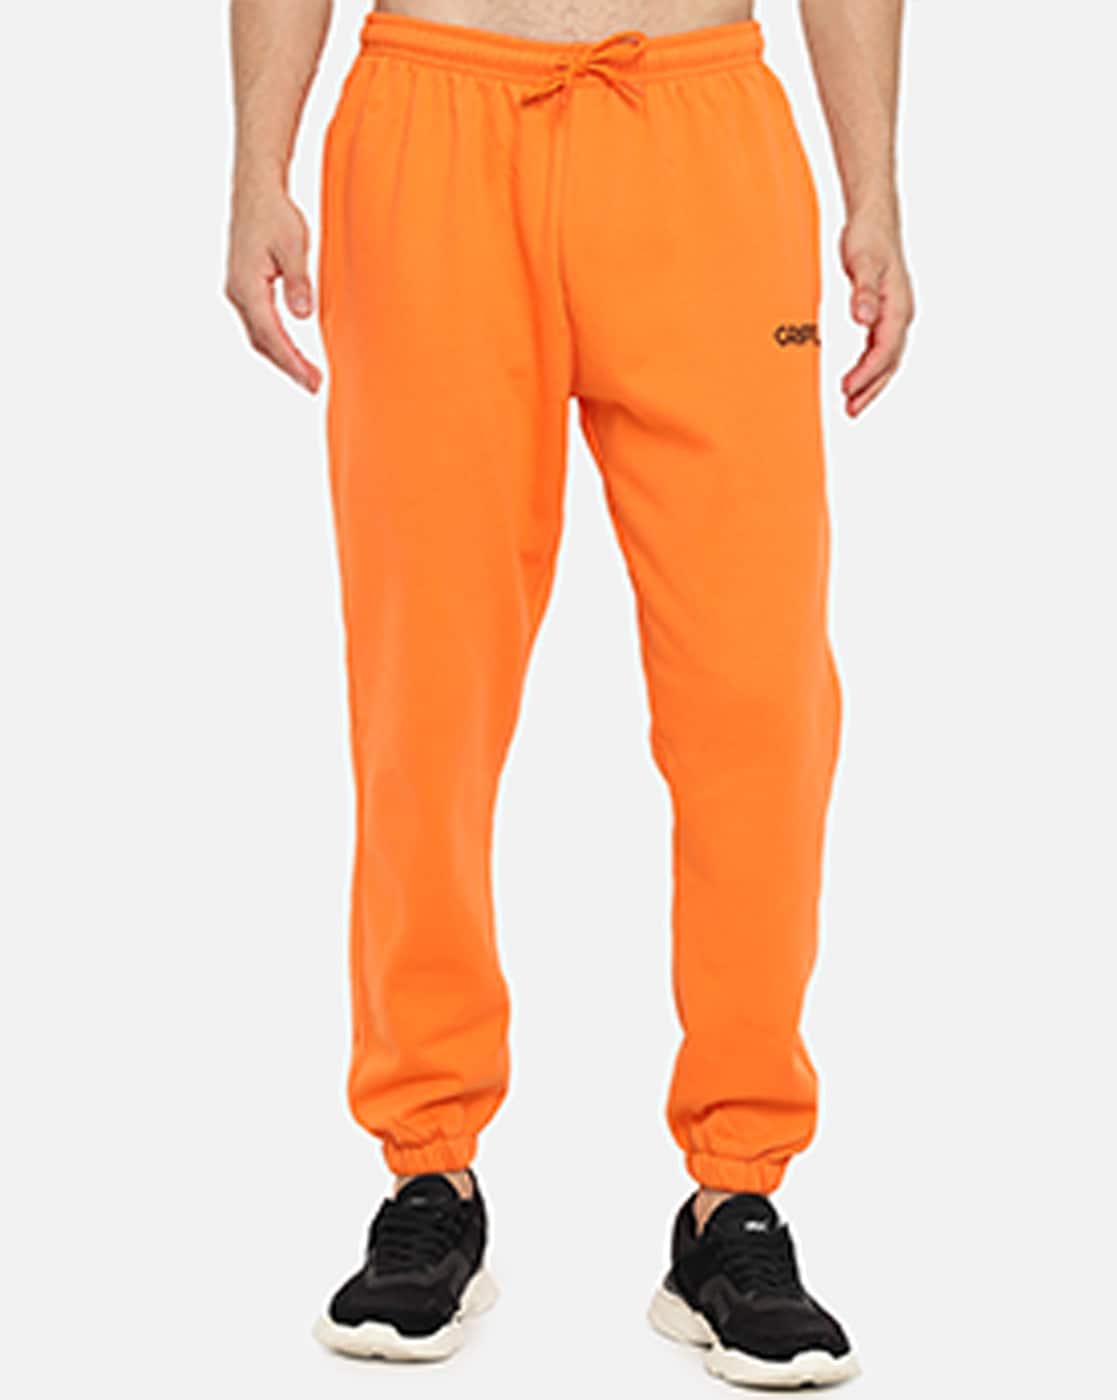 Buy Orange Track Pants for Women by Besiva Online  Ajiocom